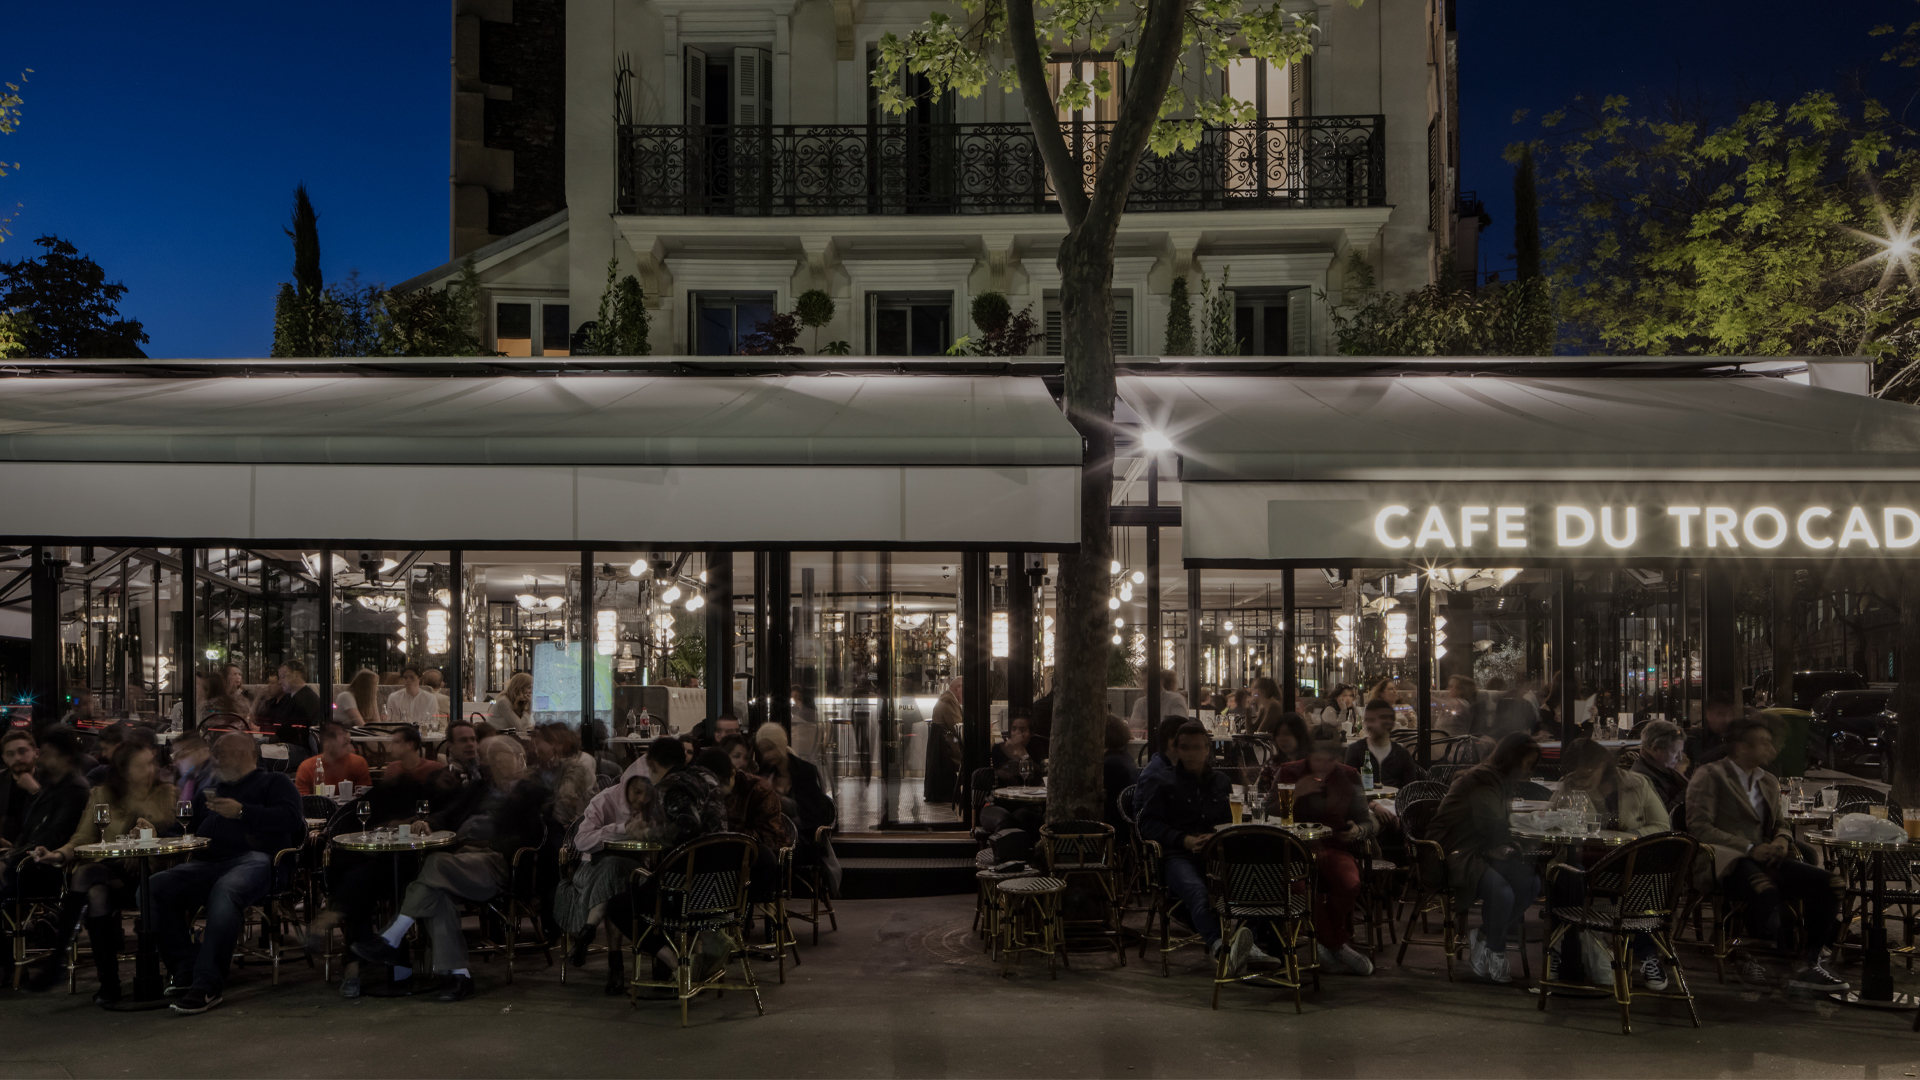 https://menuonline.fr/cafedutrocaderoparis/images/restaurant_cHNP1K.jpg